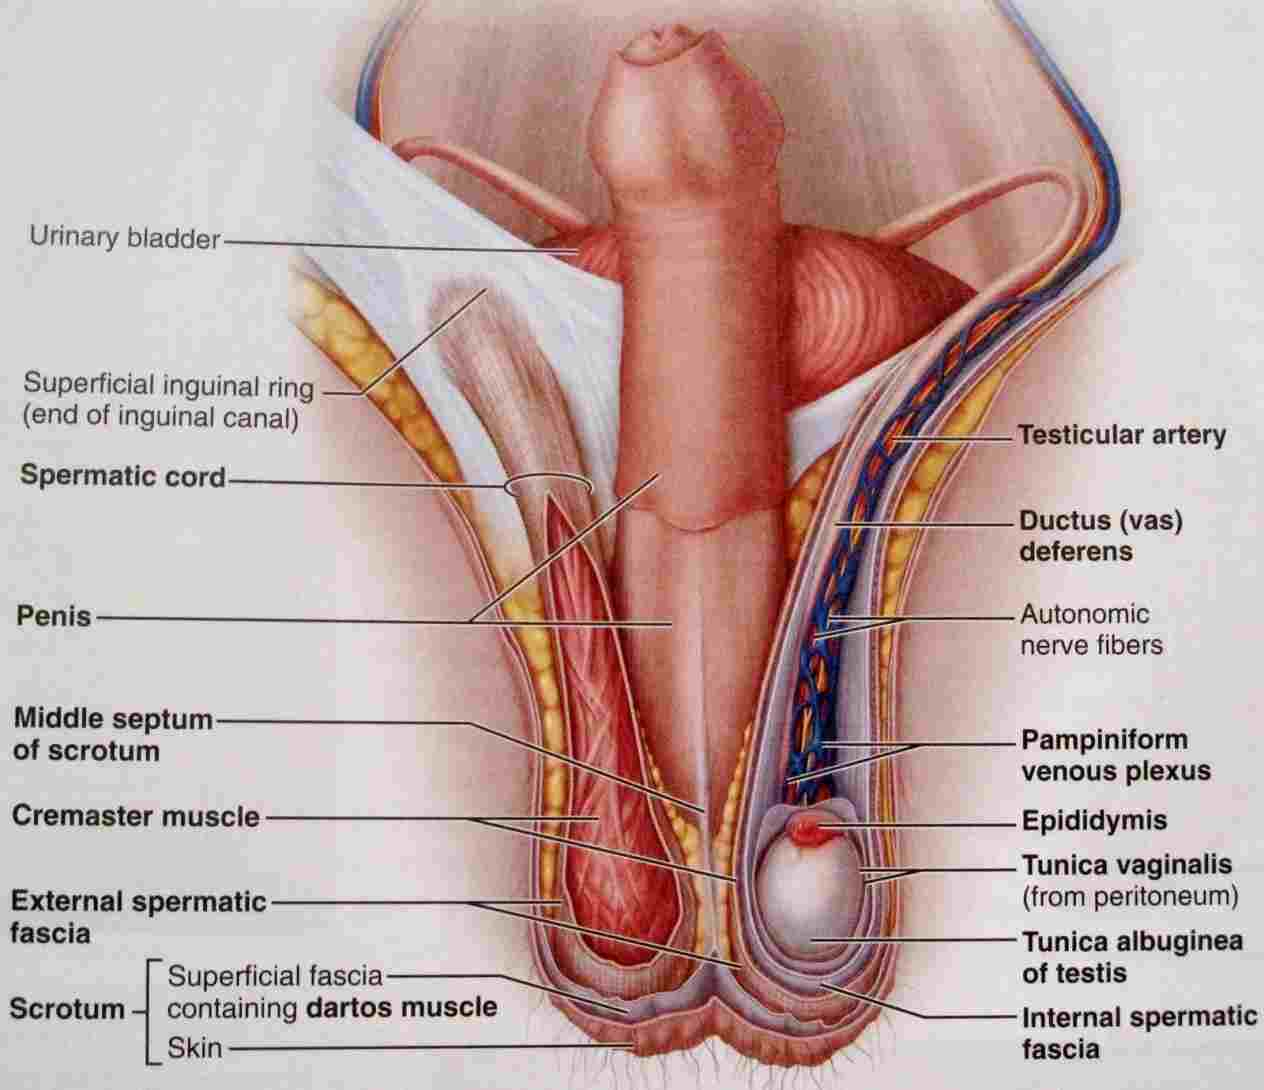 Female Reproductive System Diagram External Reproductive System Of Female Diagram Of Anatomy